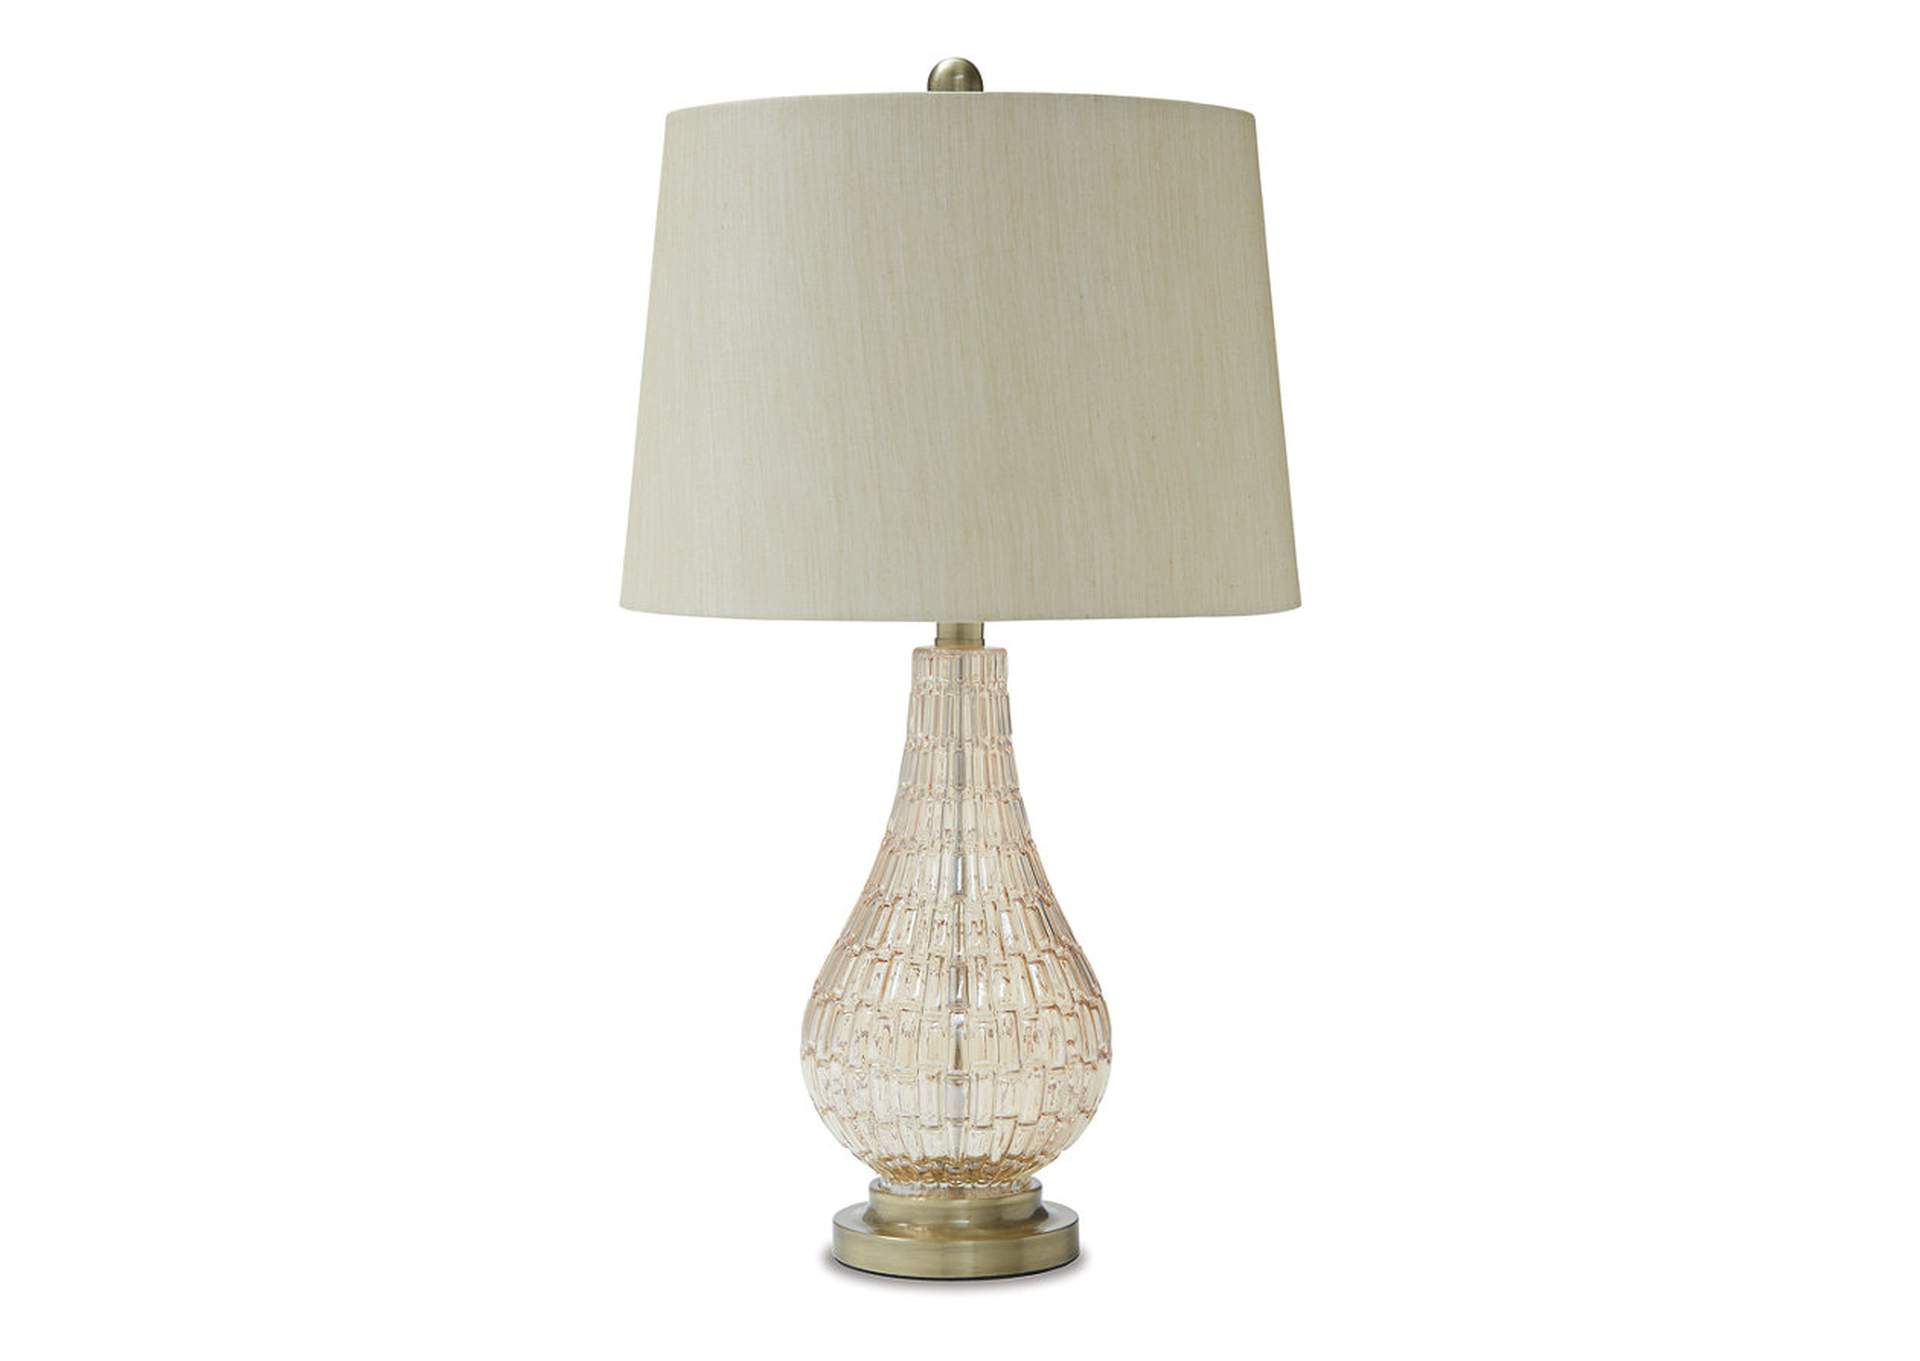 Latoya Table Lamp,Signature Design By Ashley